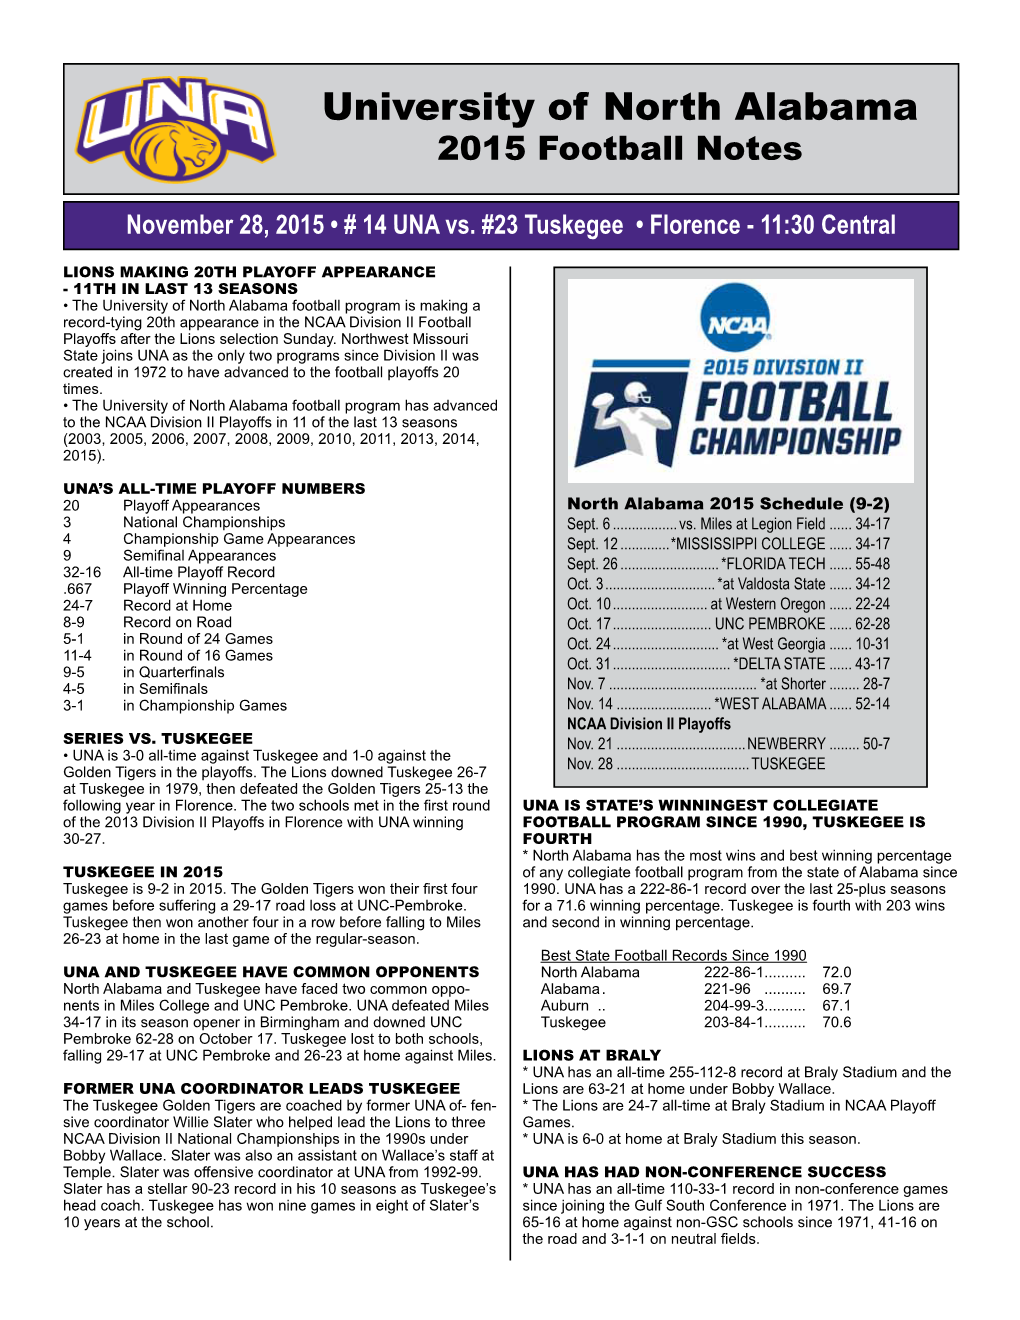 University of North Alabama 2015 Football Notes